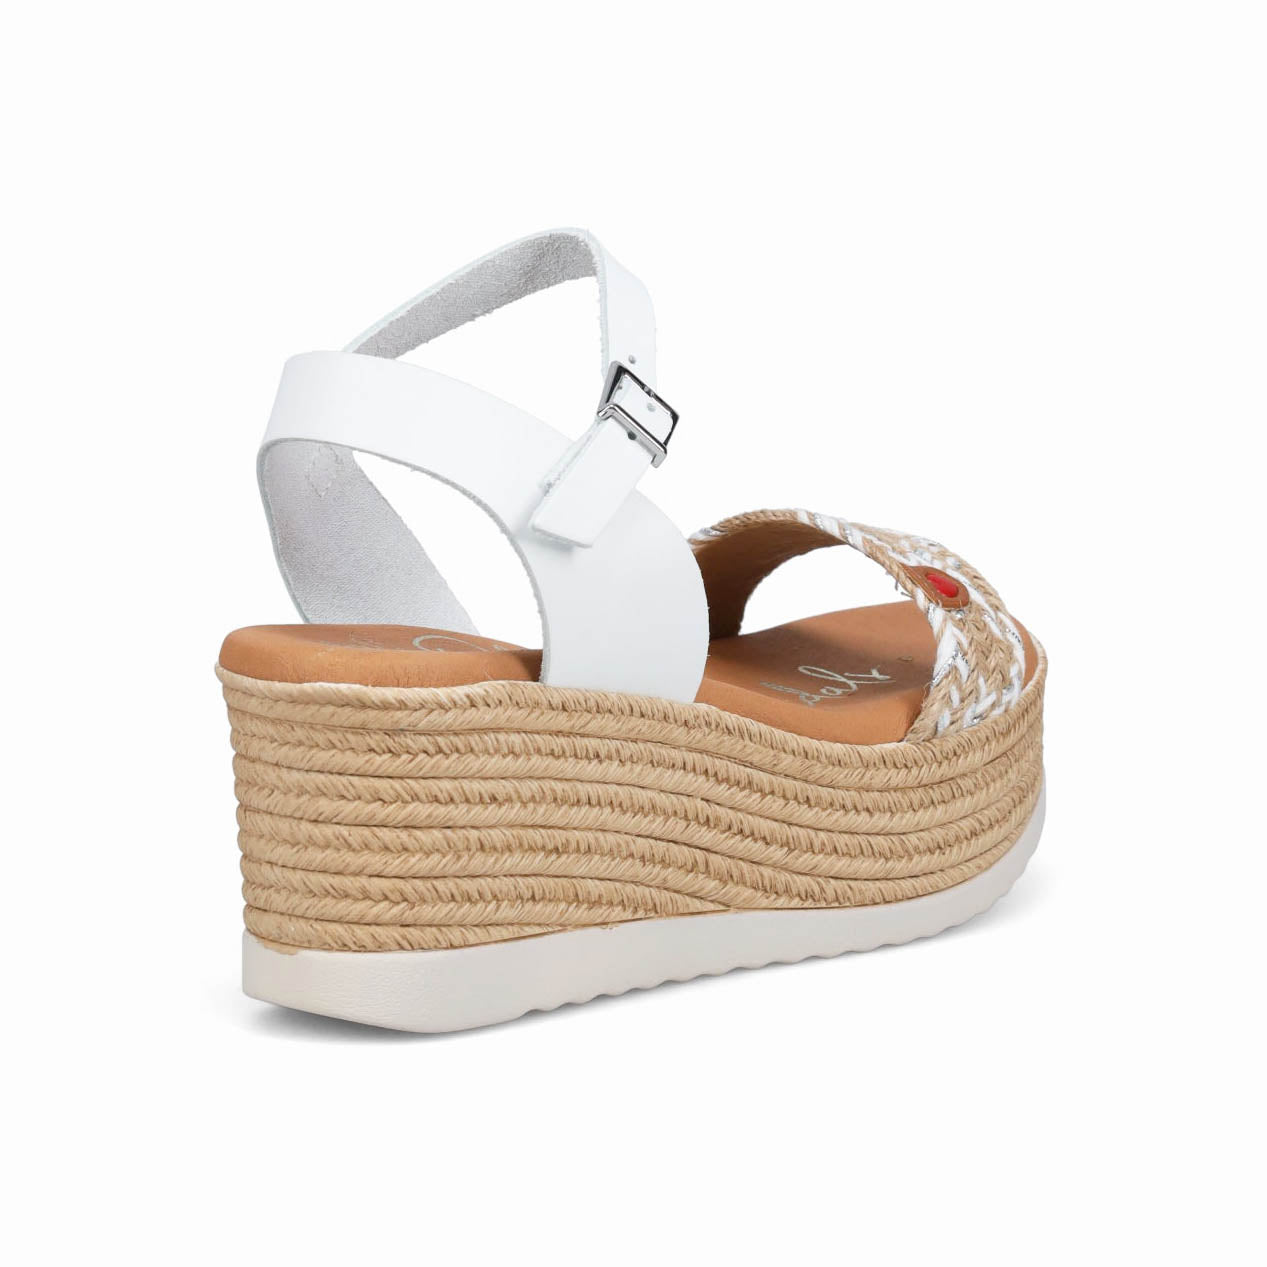 Oh My Sandals sandalo zeppa bianco con fascia in corda con taccosottopiede memor